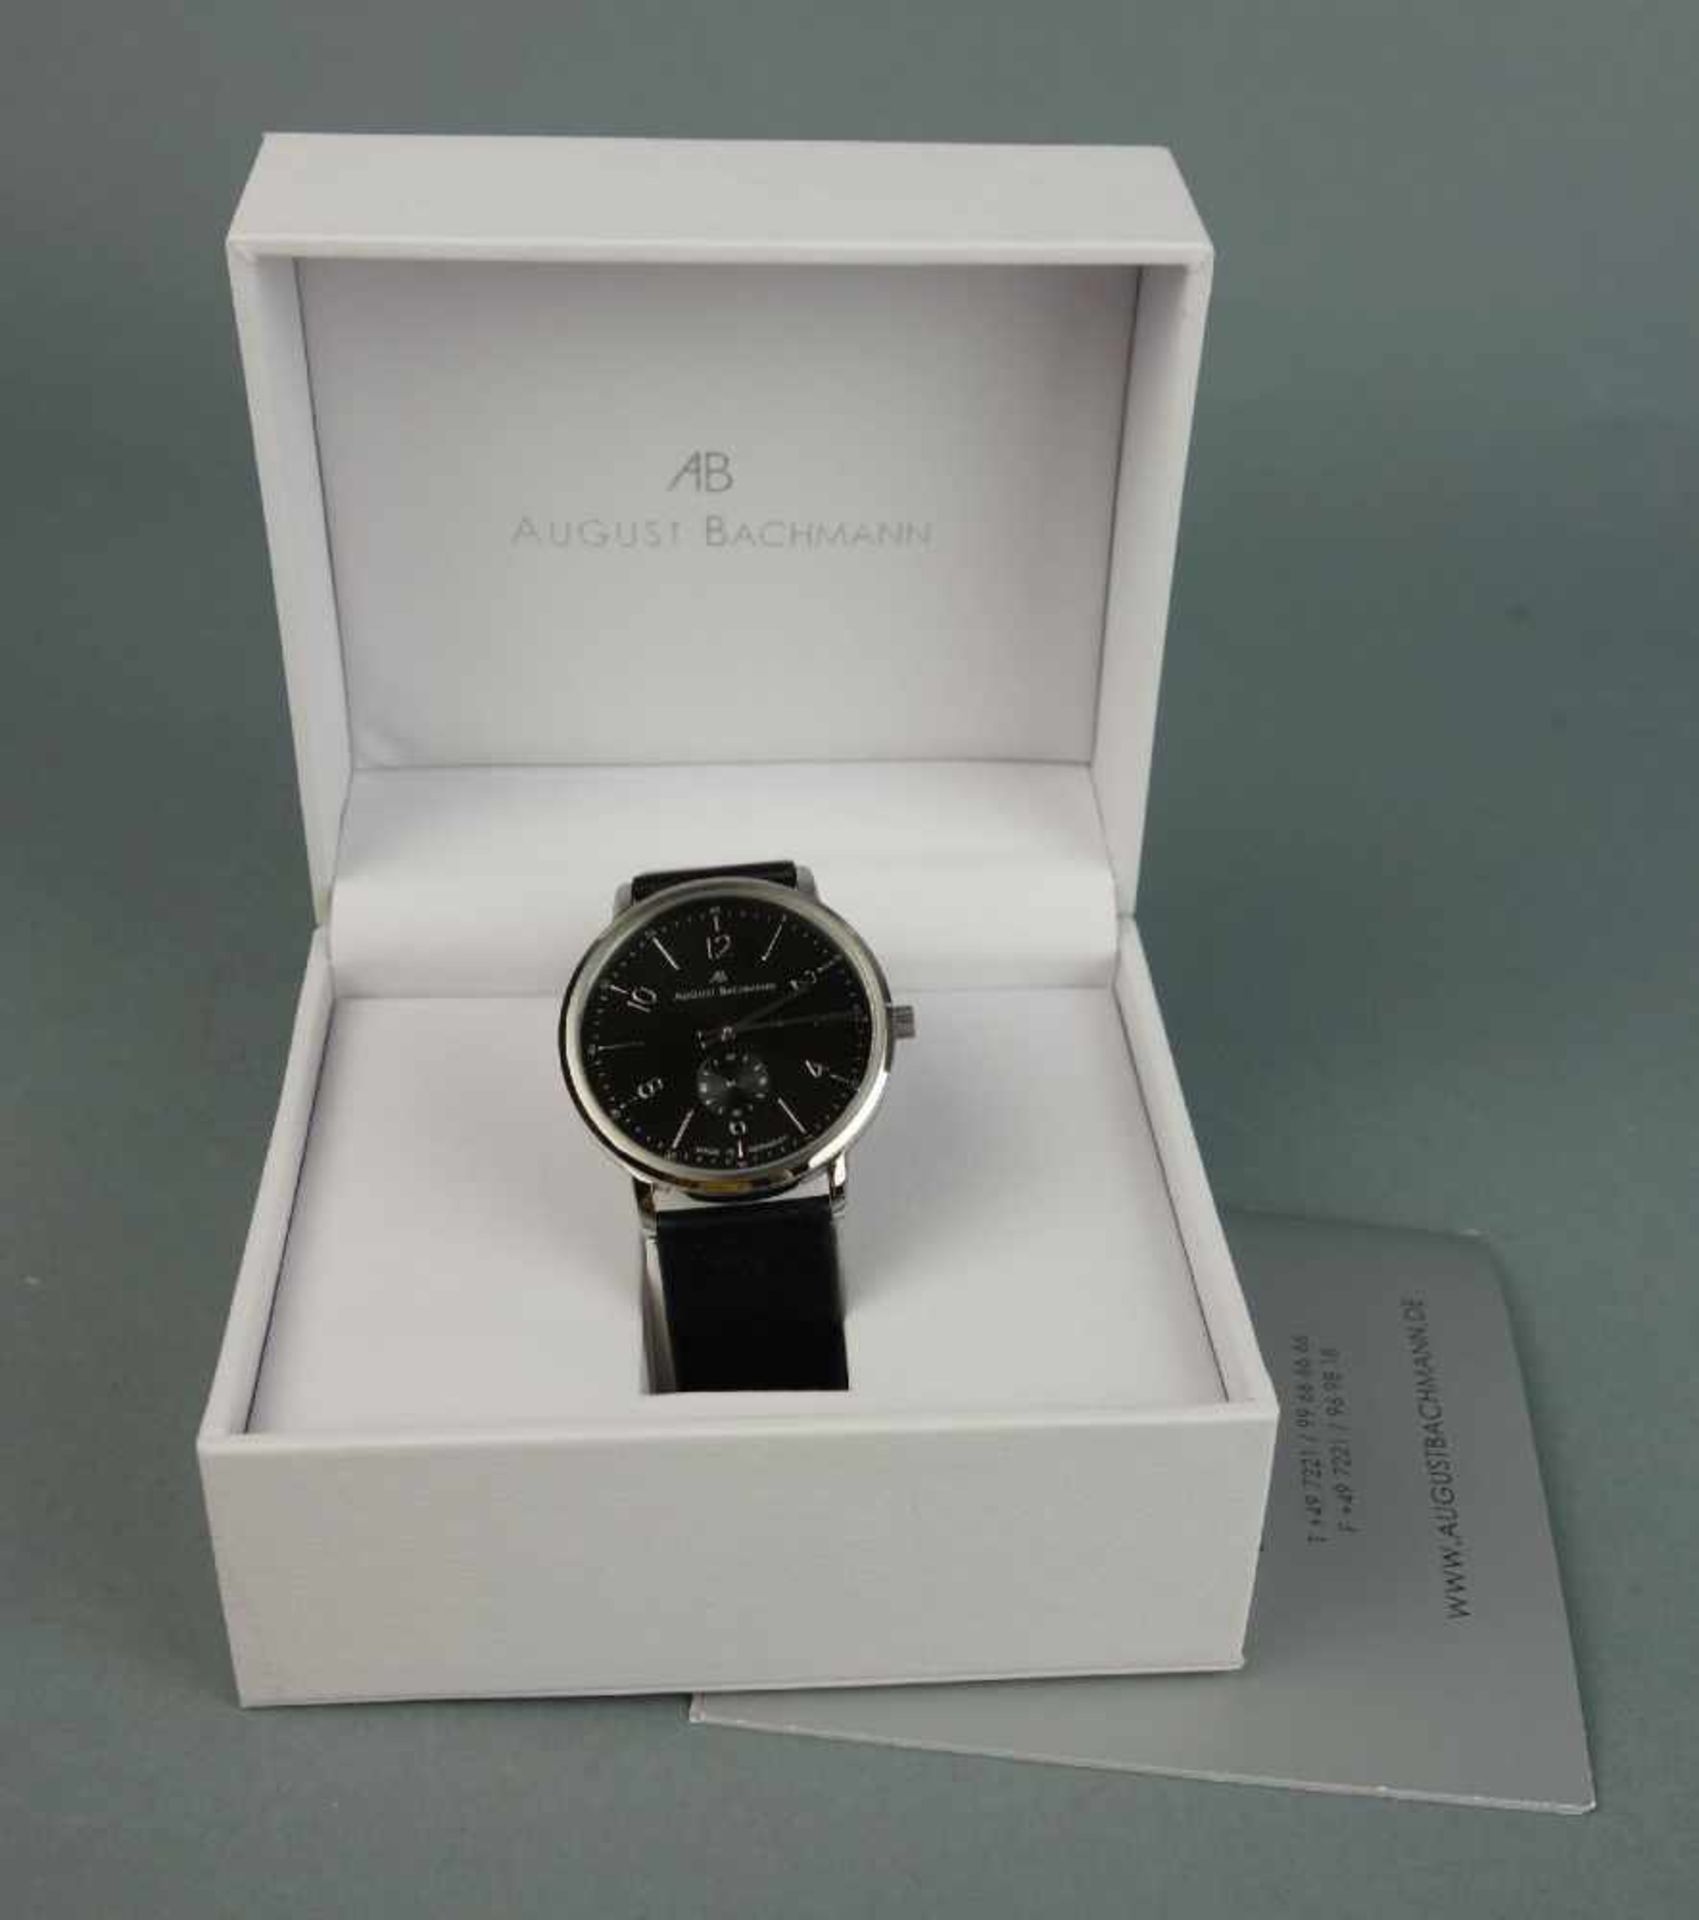 ARMBANDUHR / wristwatch, Quarz-Uhr, Manufaktur August Bachmann / Deutschland. Modell "10101.35. - Image 4 of 4